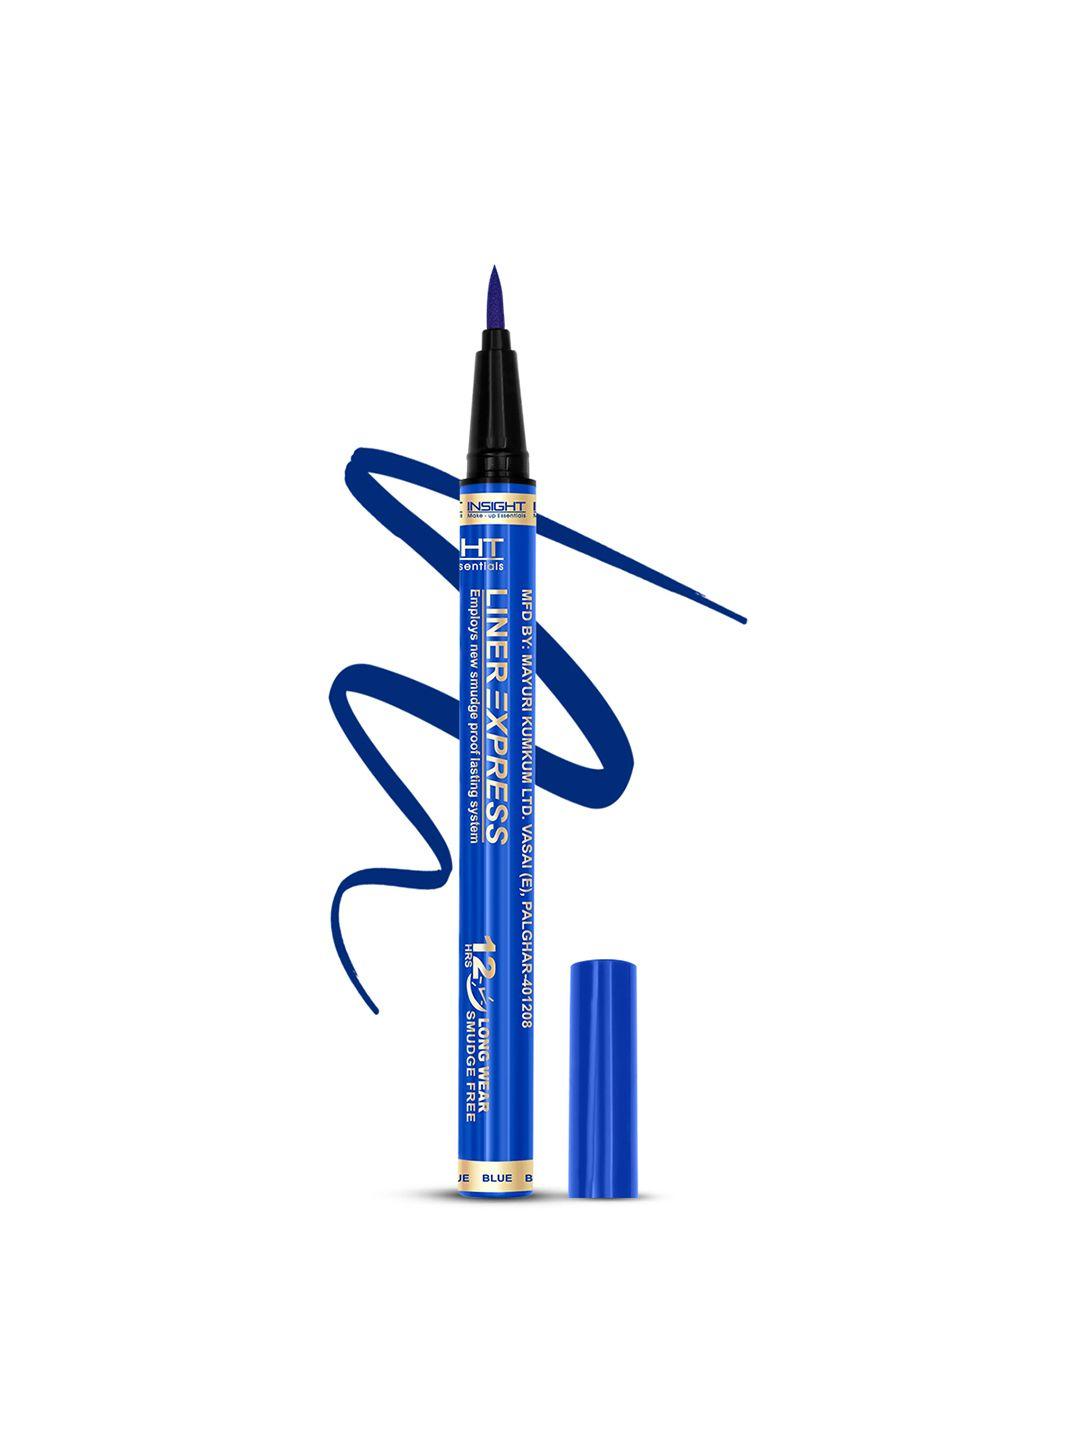 insight cosmetics liner express long-wear smudge-free eyeliner pen - blue